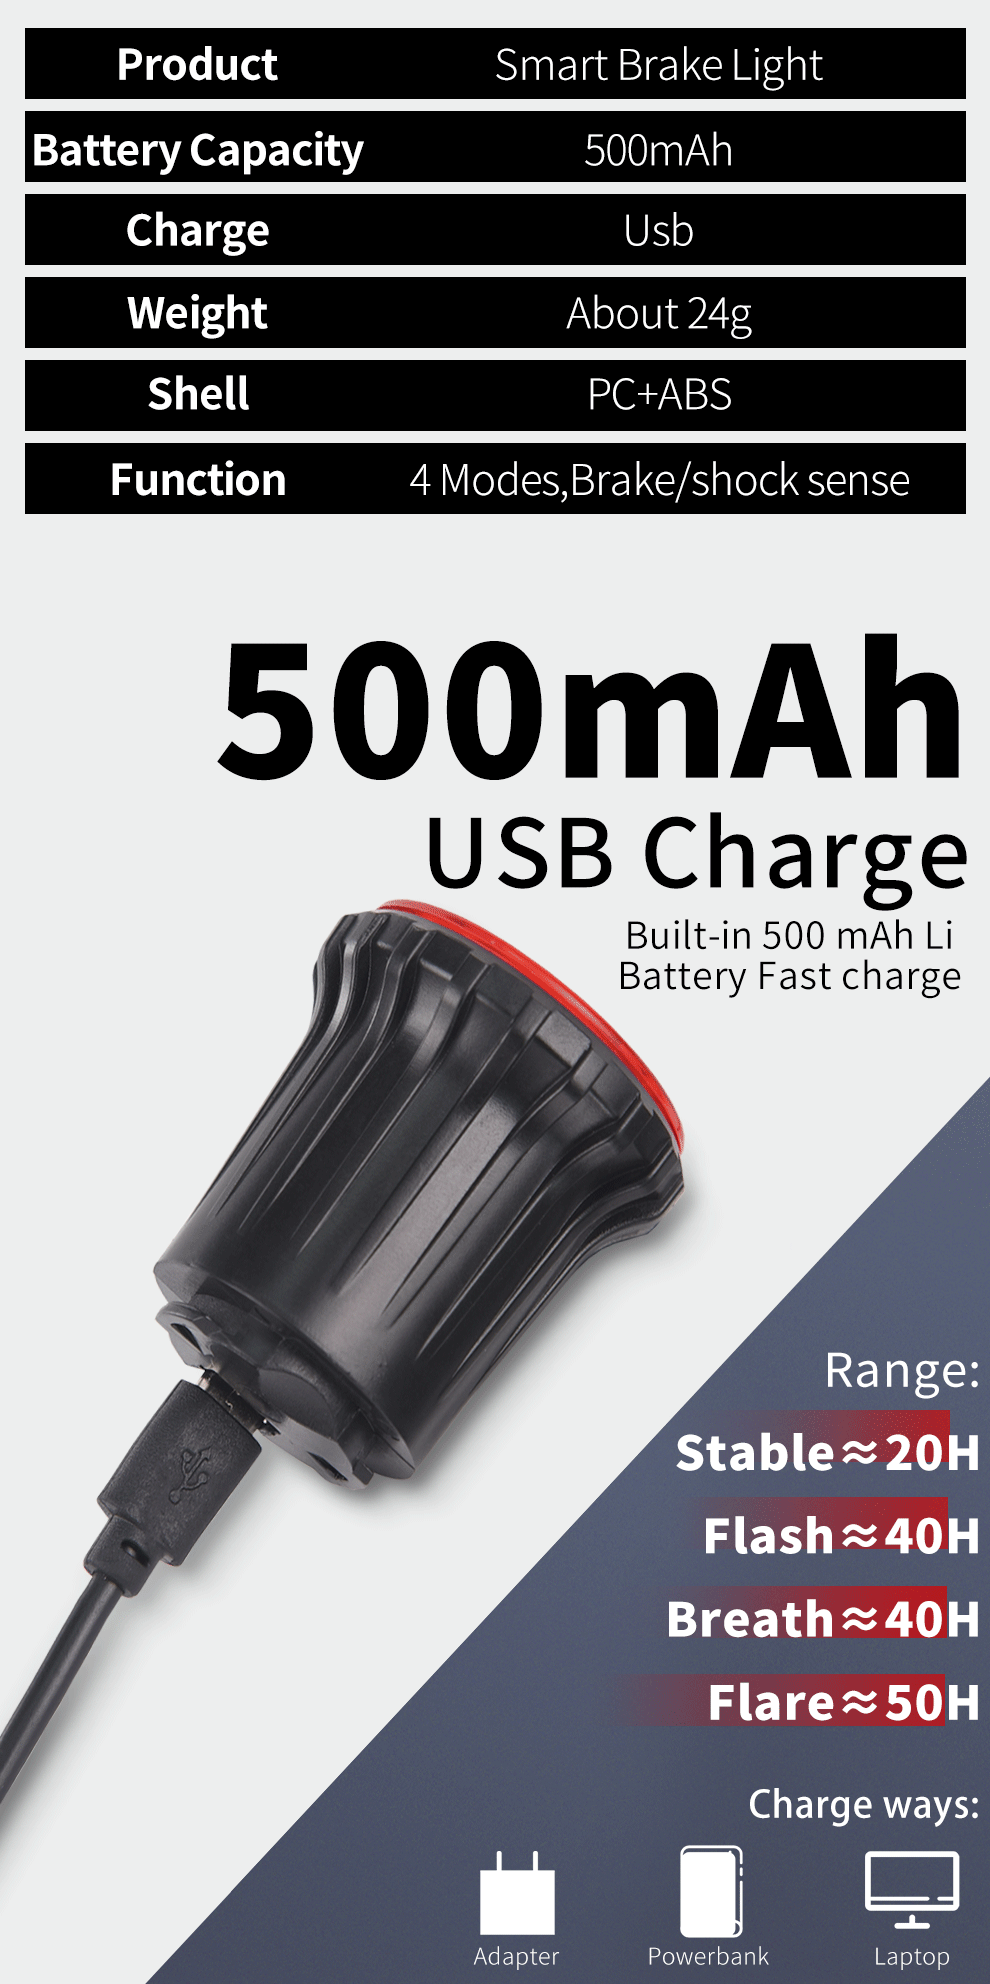 500mAh USB Charge bike tail light